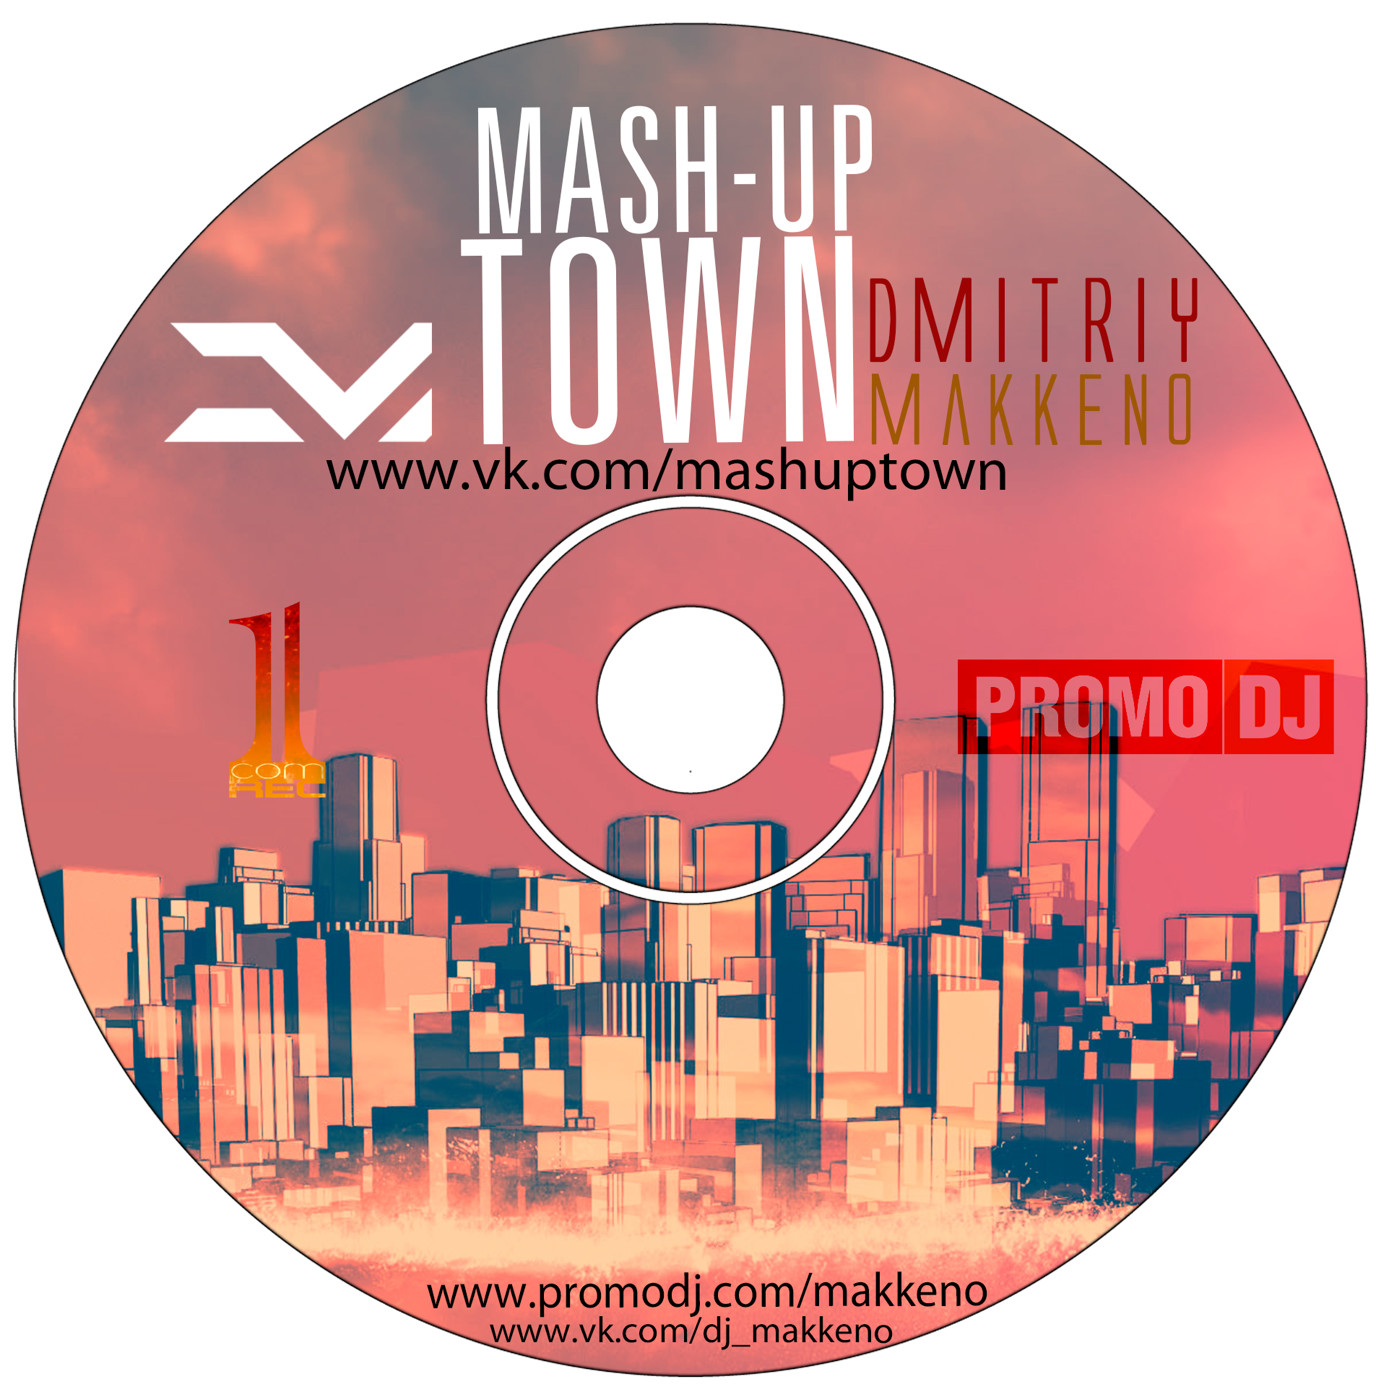 Dmitriy Makkeno - Mash-Up TOWN #4 [2017]